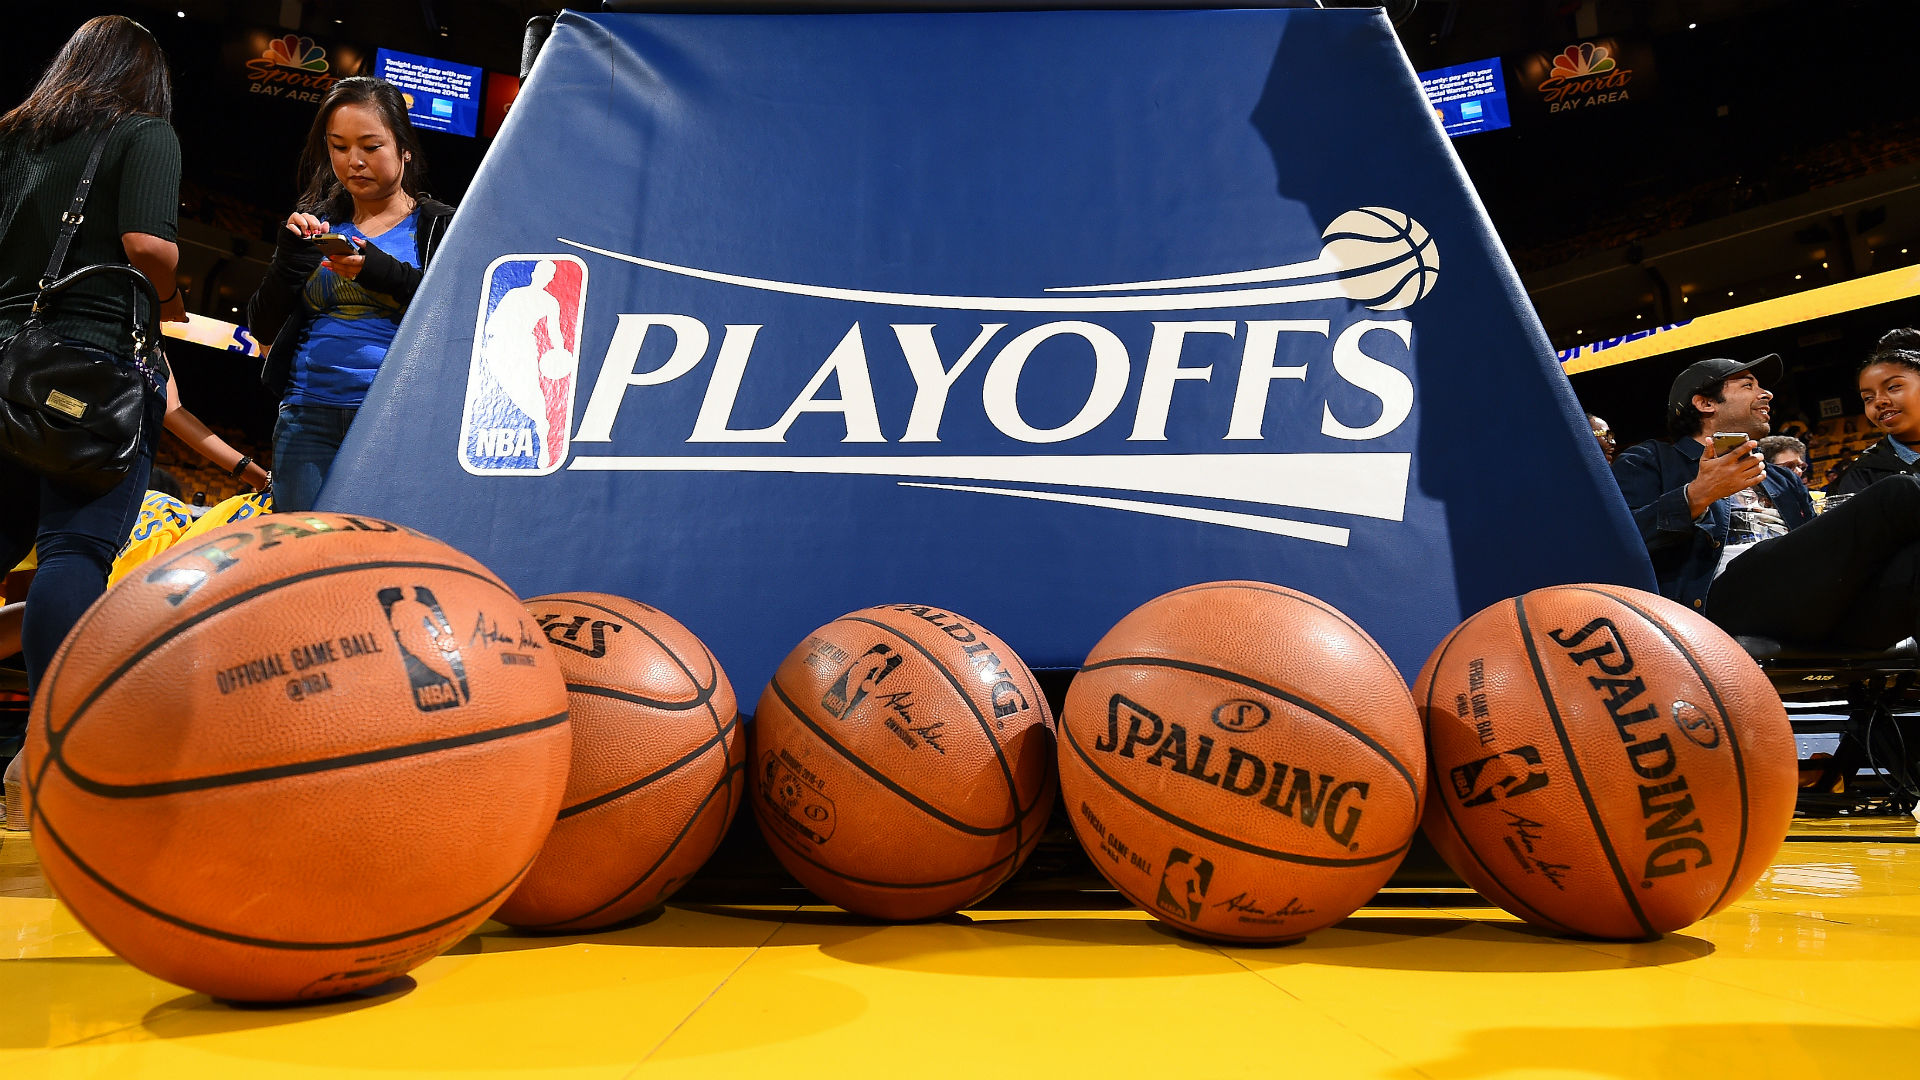 NBA Playoffs 2019: Eastern Conference Playoff bracket is set | NBA.com